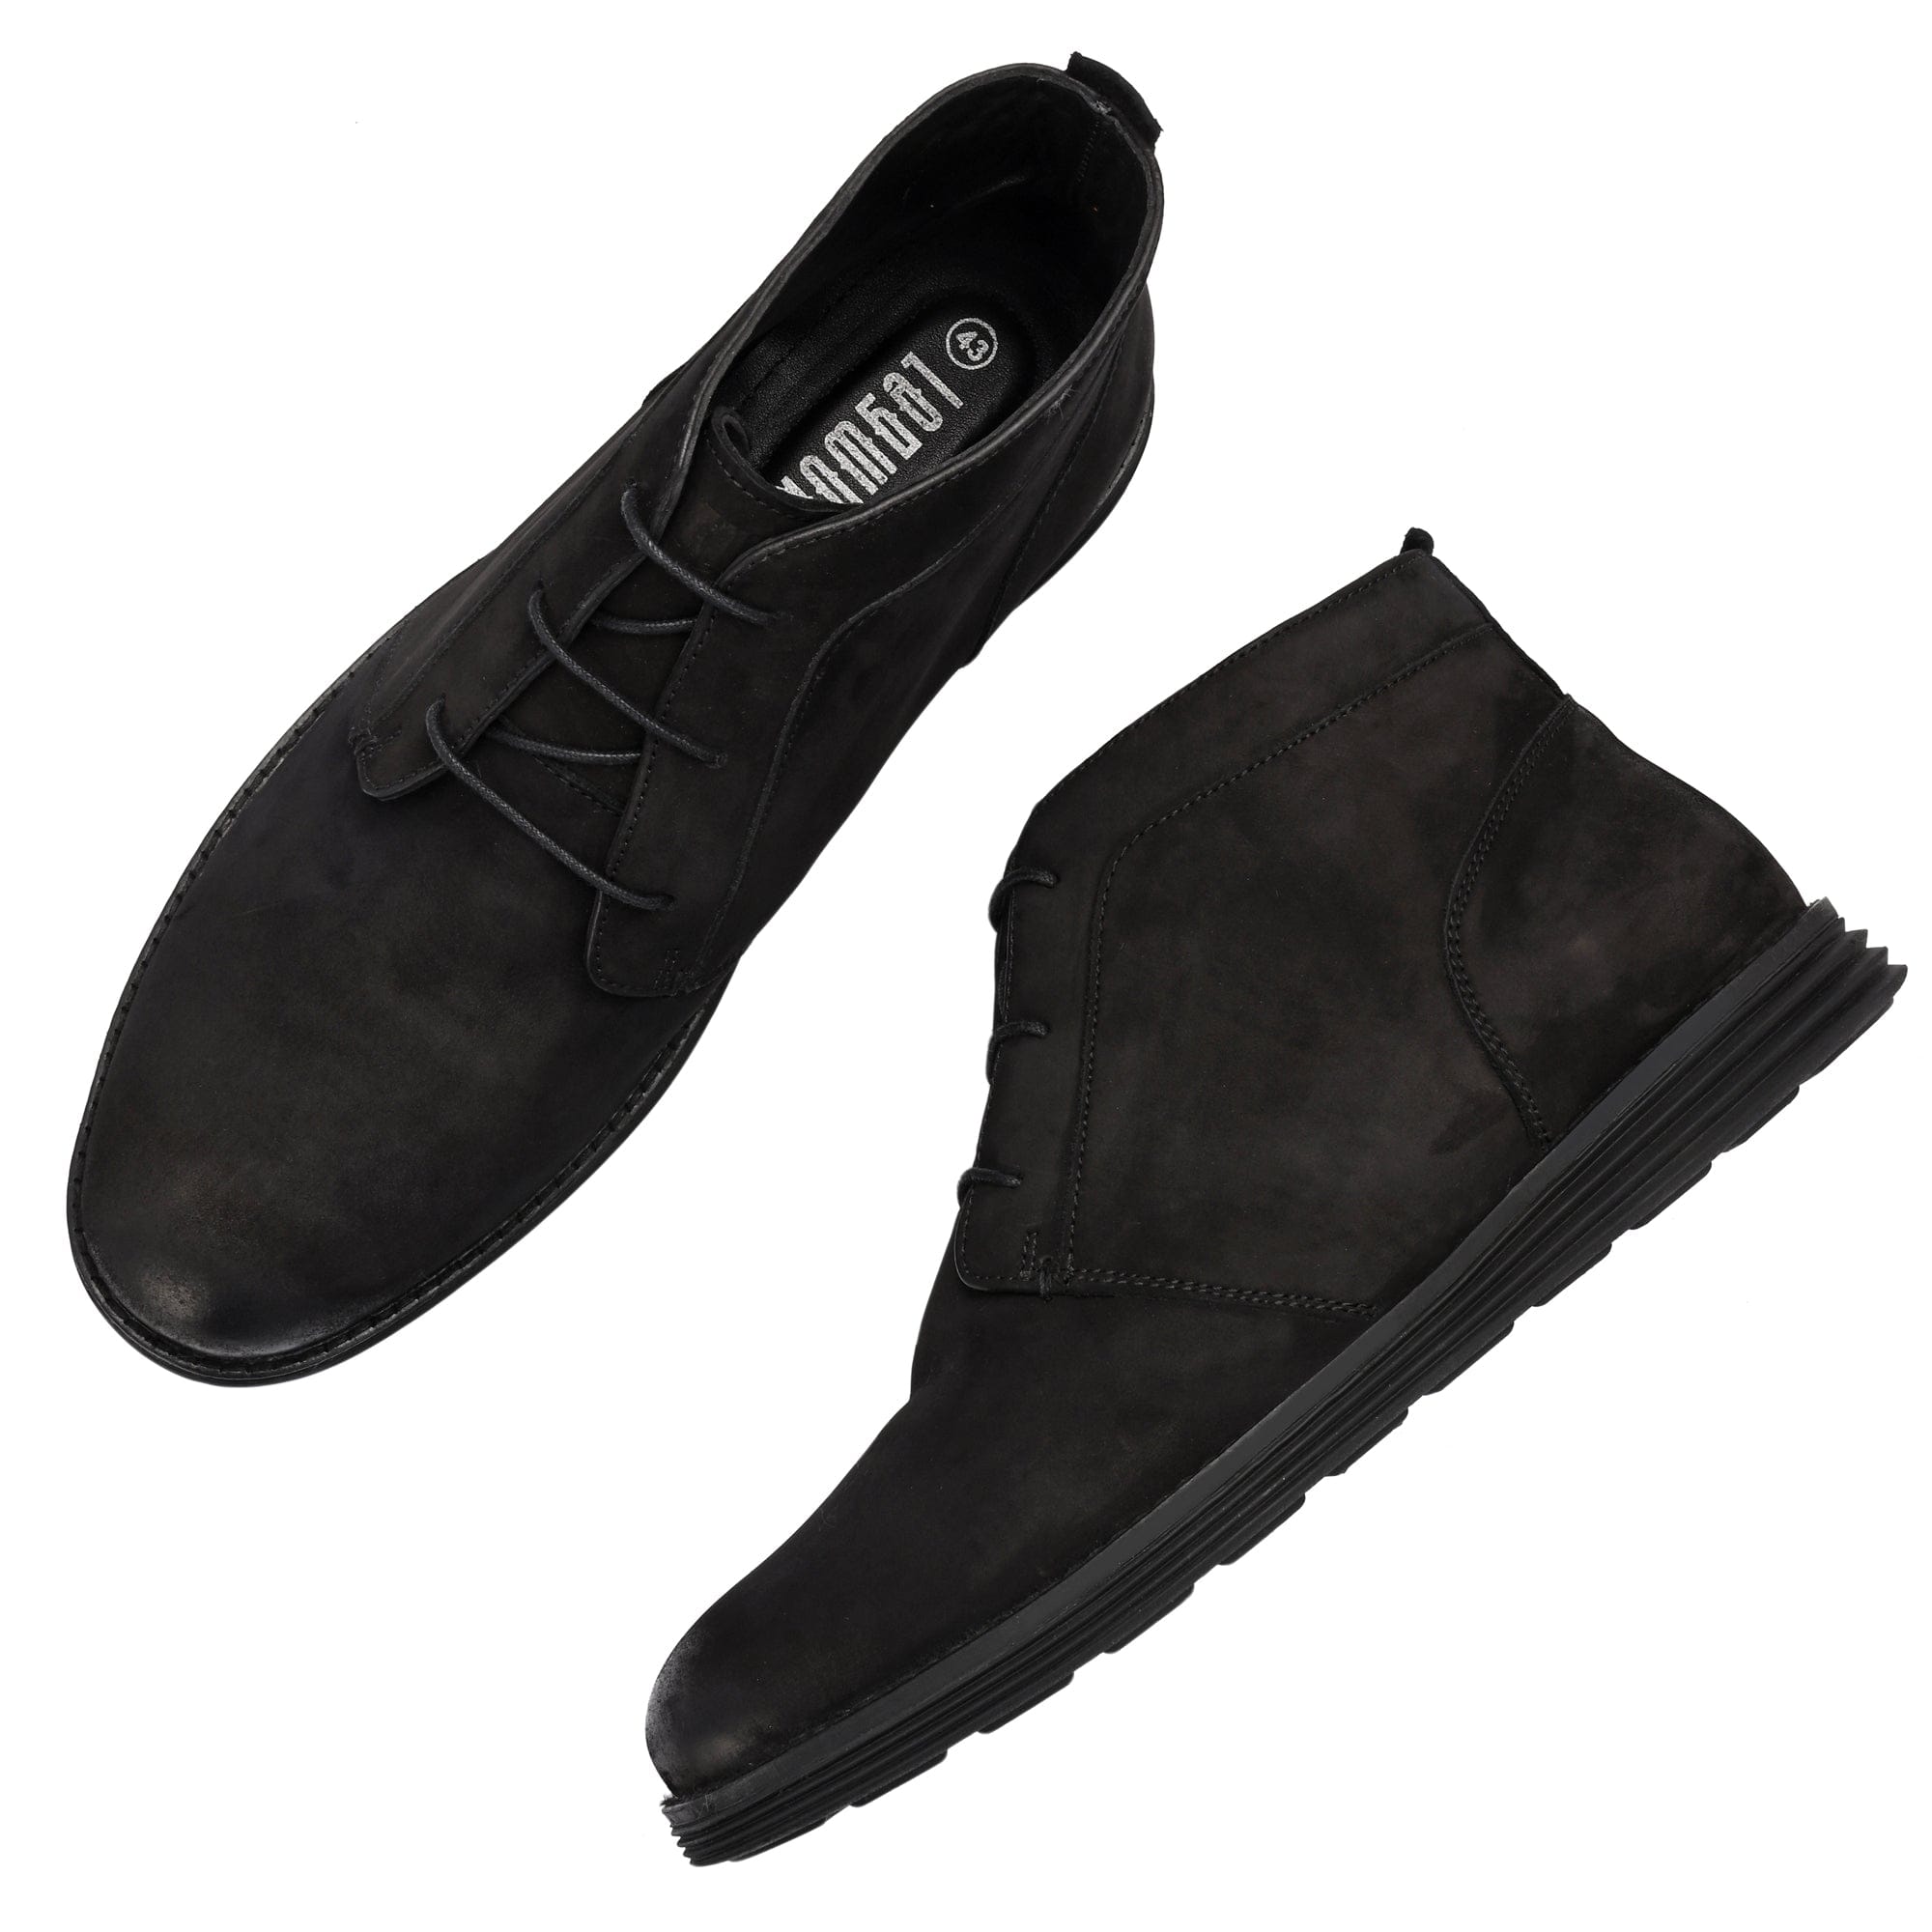 Legwork Retro Black Italian Nubuck Leather Boot